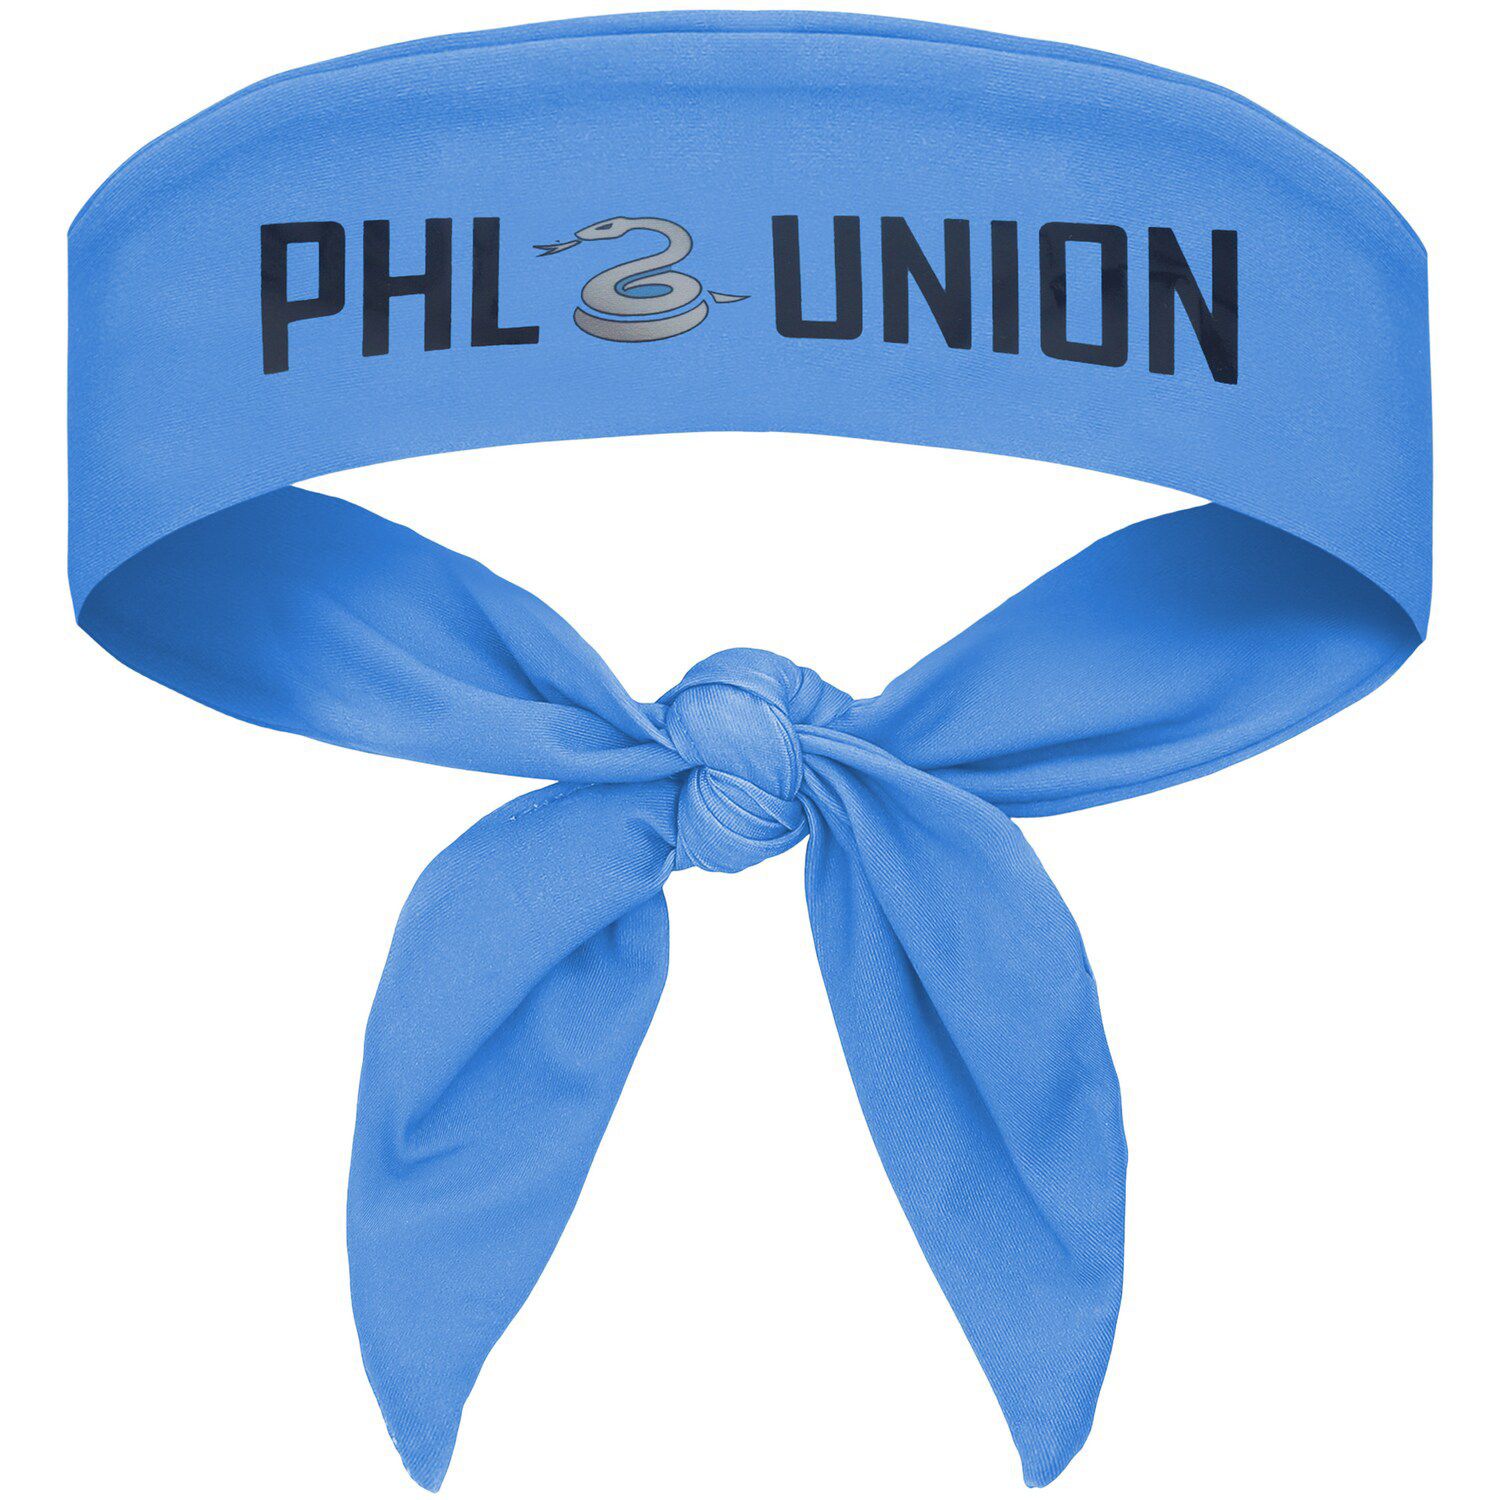 Image for Unbranded Light Blue Philadelphia Union Tie-Back Headband at Kohl's.